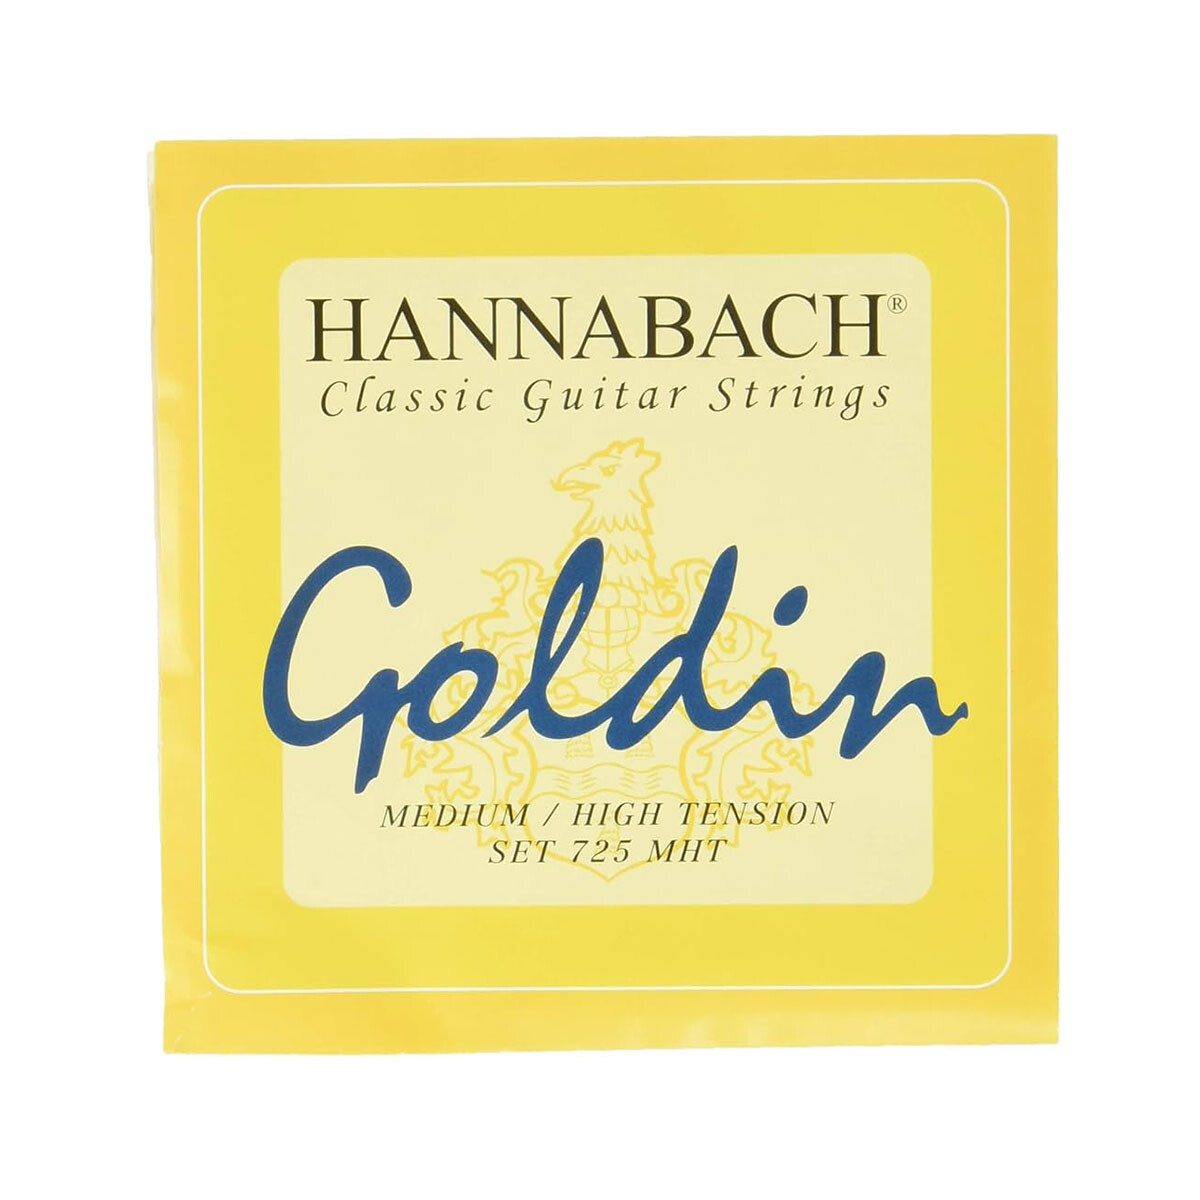 Encordado clasica Hannabach 725MHT Goldin tension media alta 